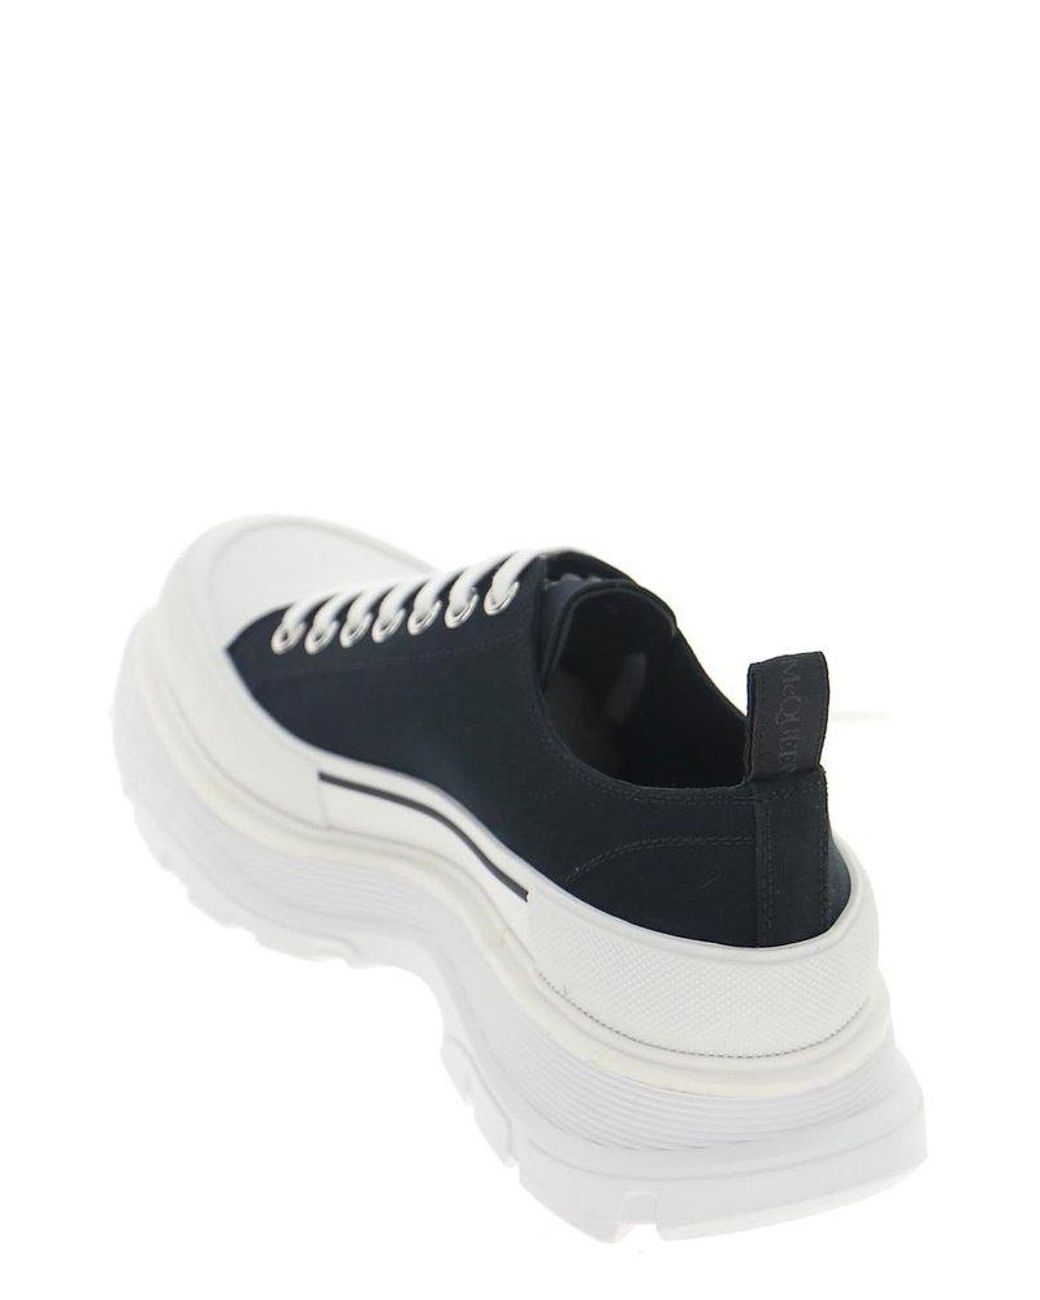 Alexander McQueen Tread Slick Cotton Sneakers in White/Black 